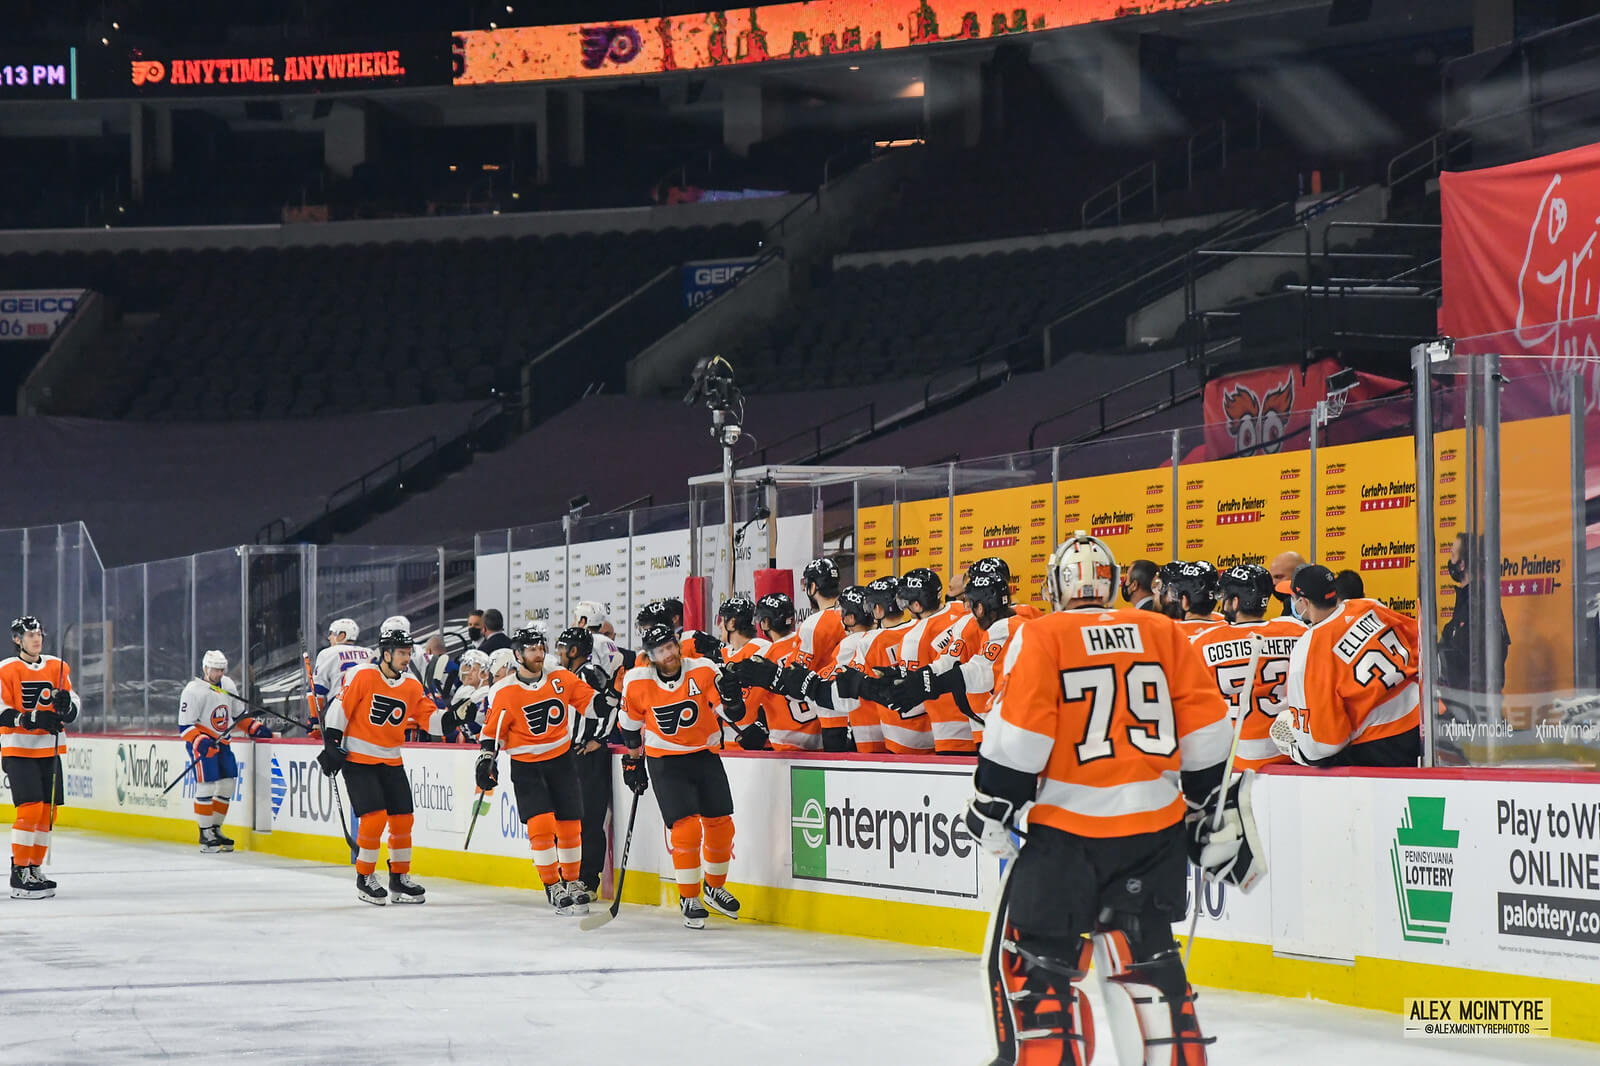 Philadelphia Little Flyers Girls Ice Hockey - Repost from